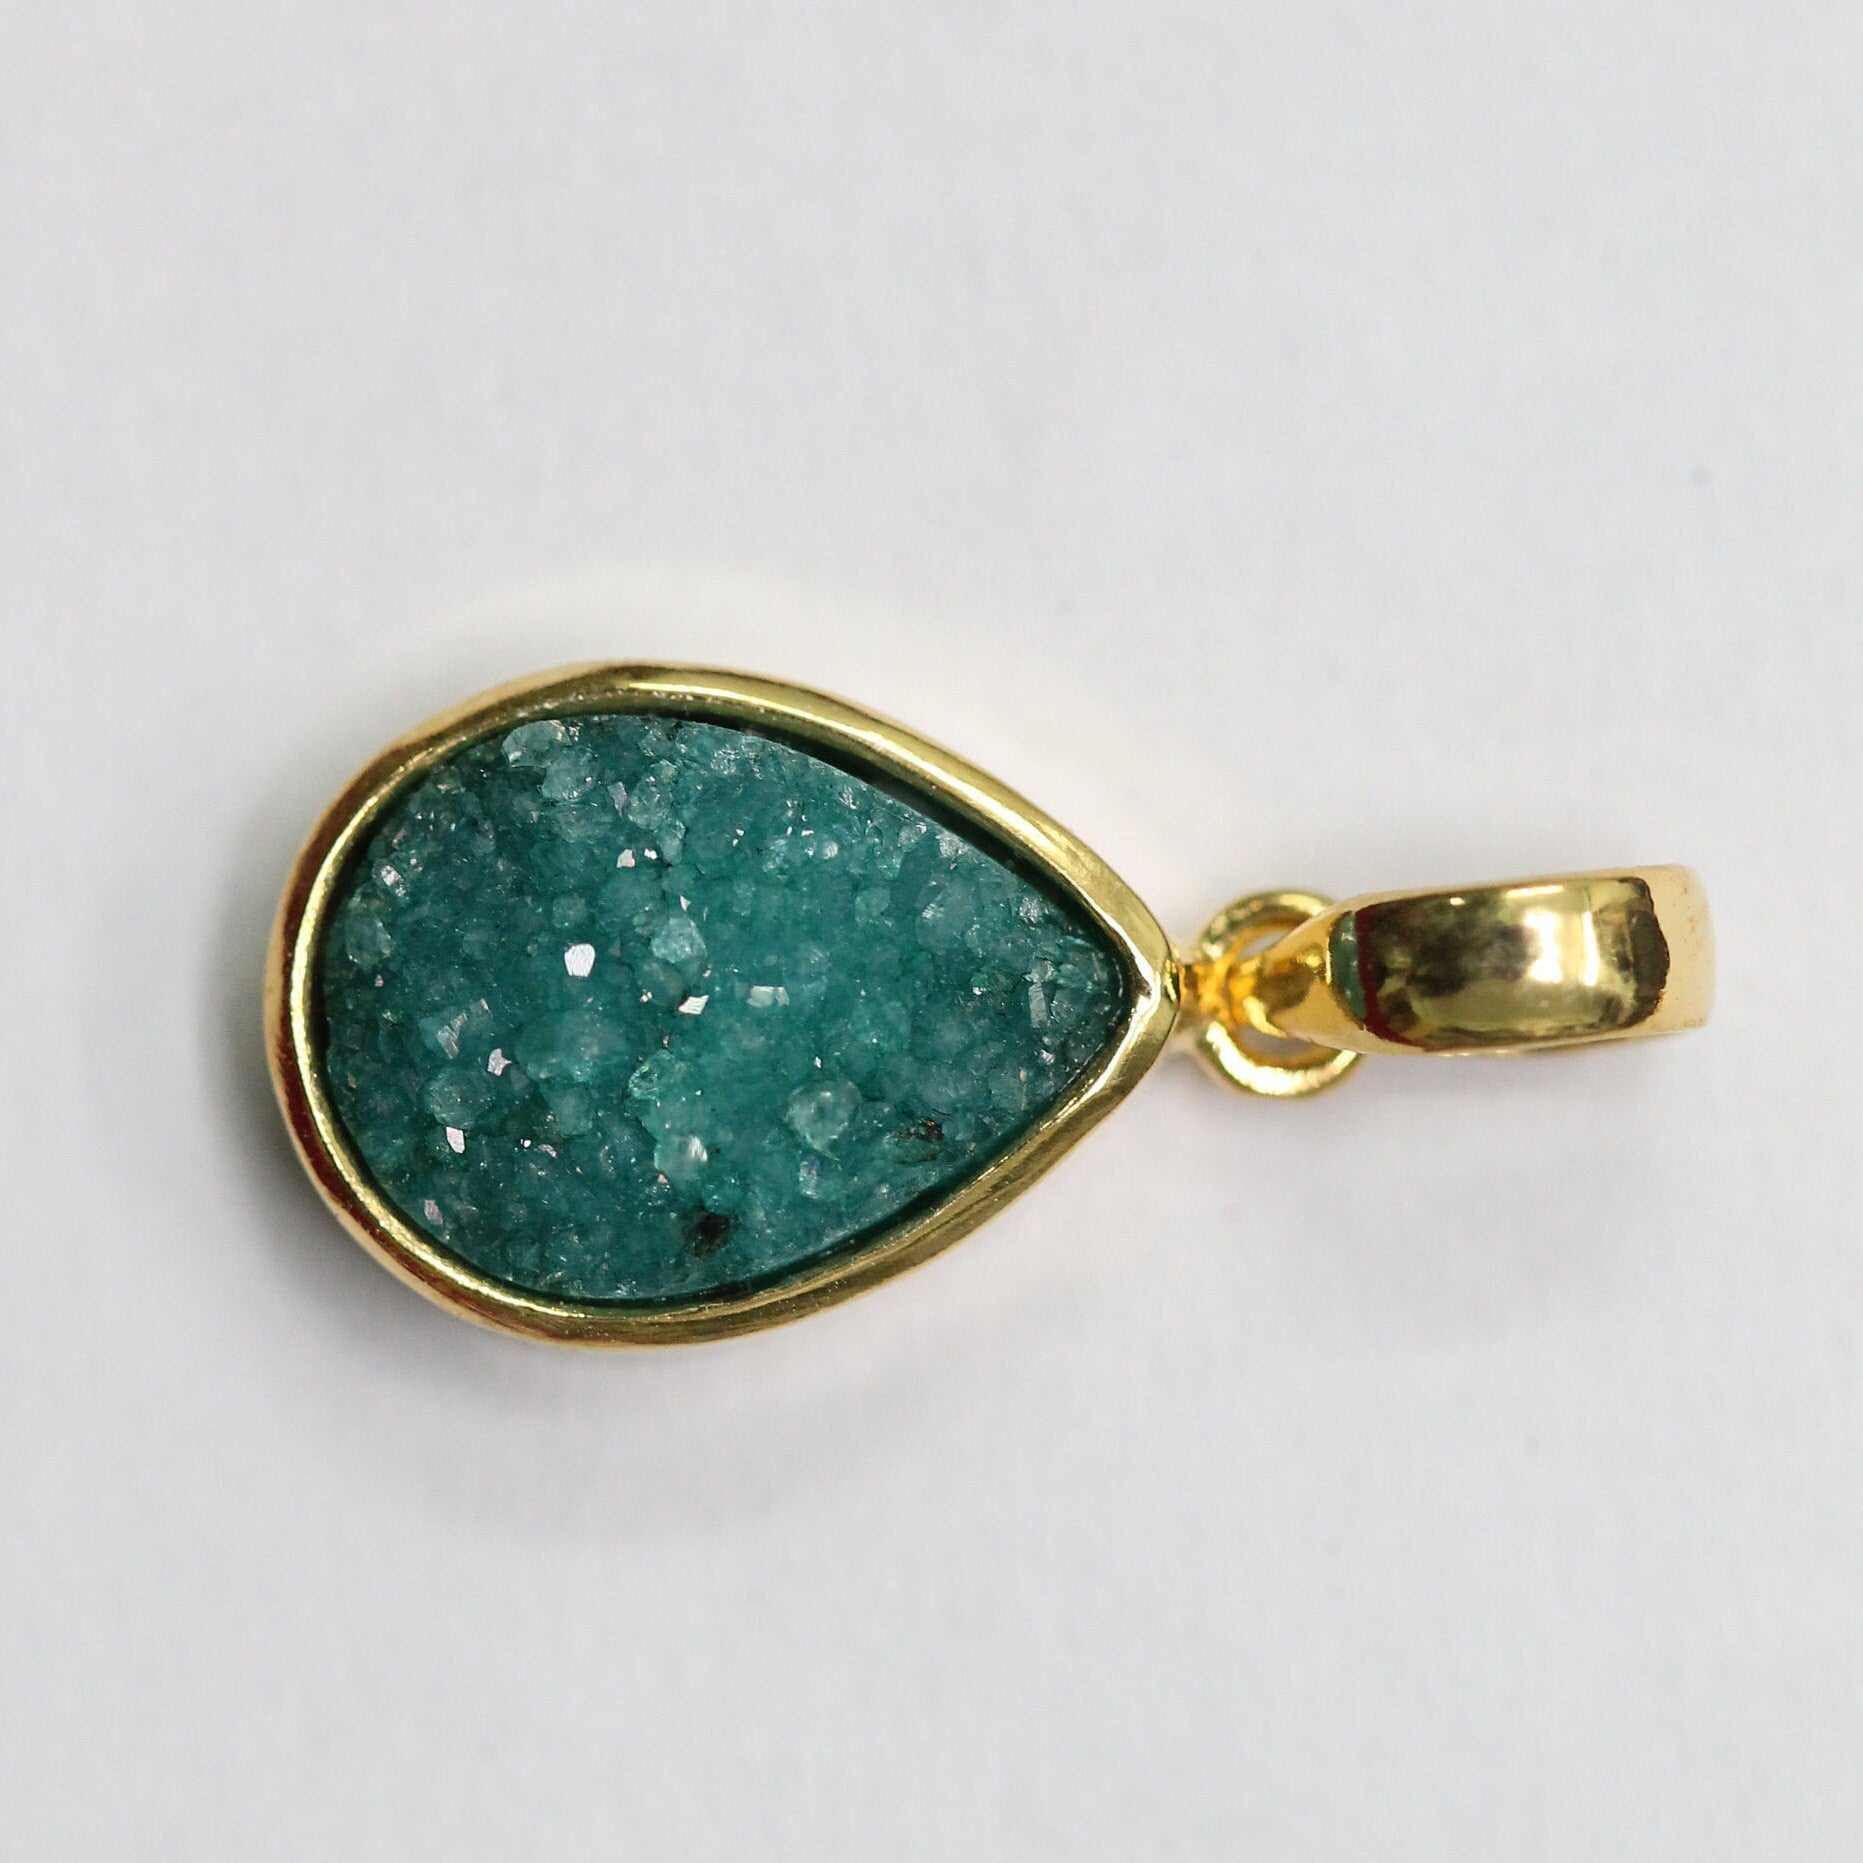 Natural Druzy Pendant, 10 * 14 mm, gold pendant, Druzy, Gemstone Pendant, Druzy Collet Pendant - Meena Design